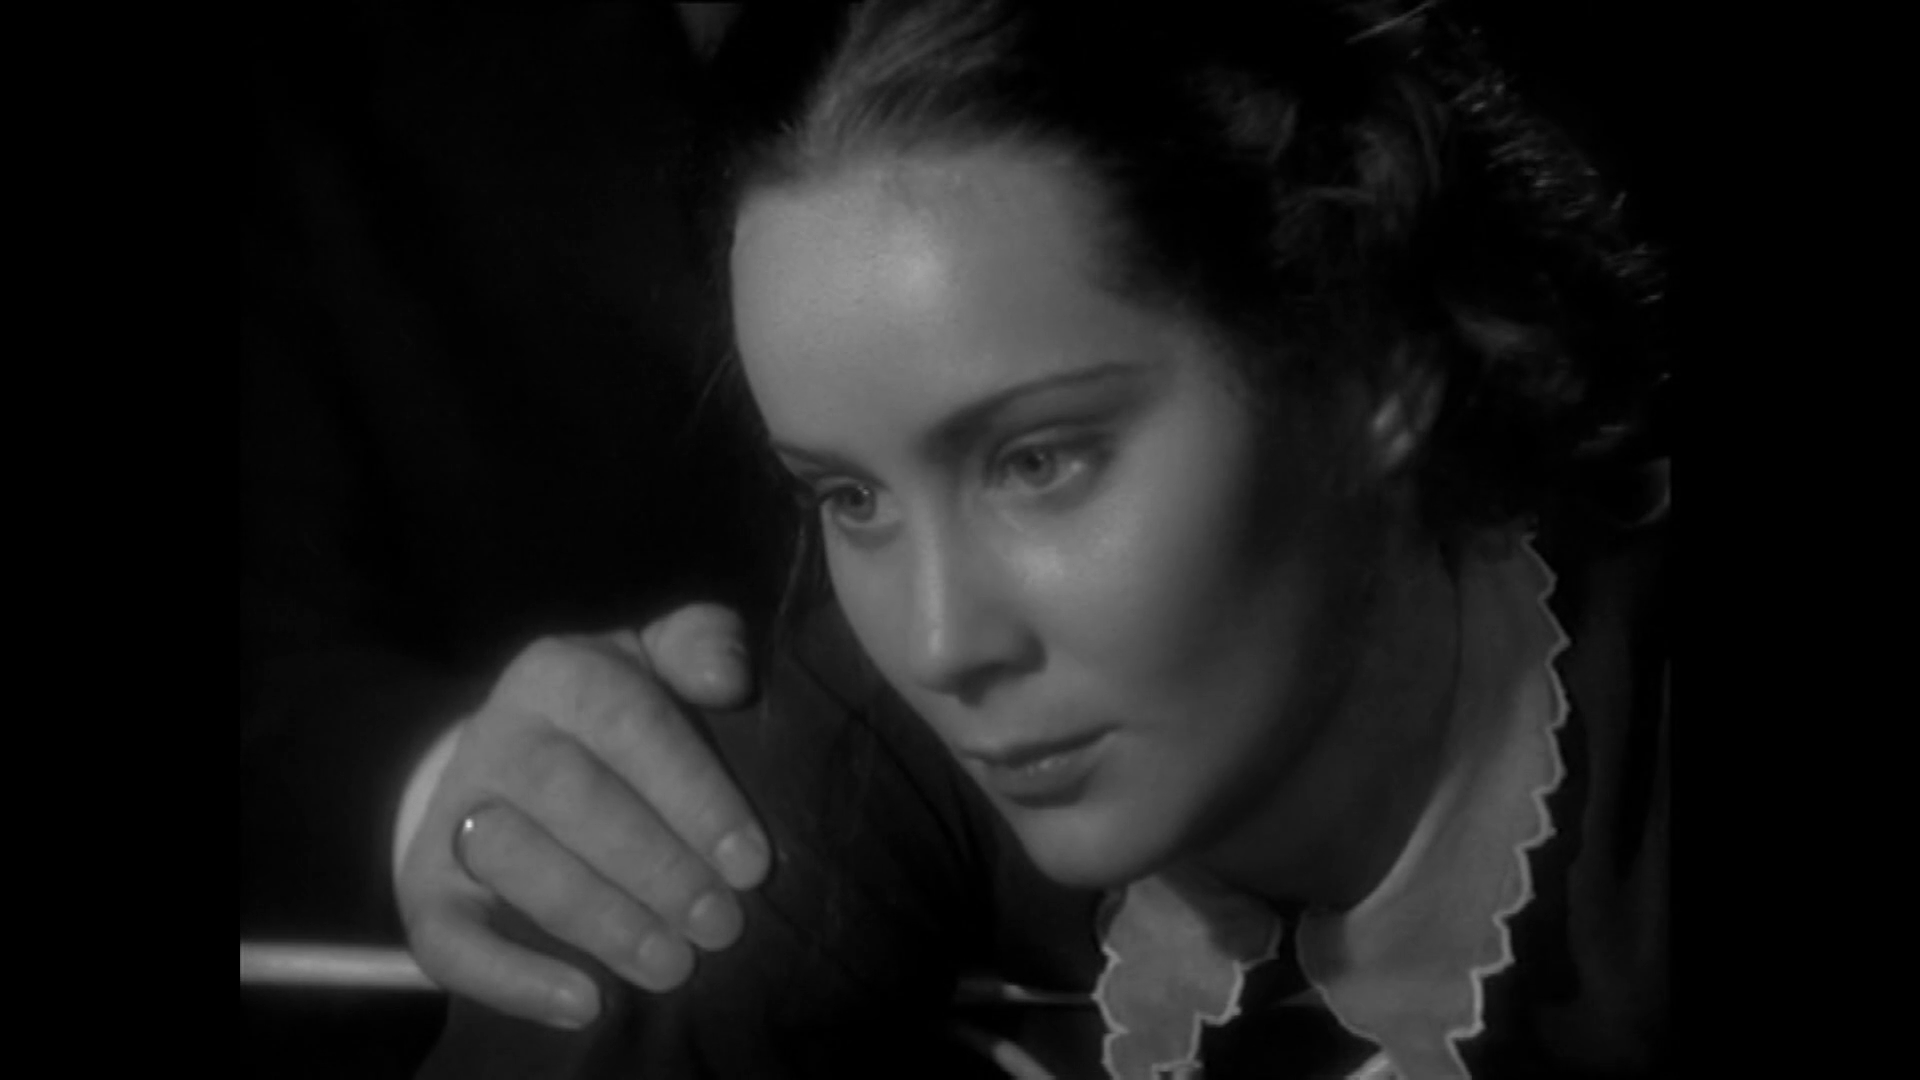 Alida Valli dans Piccolo mondo antico (Le mariage de minuit, 1941) de Mario Soldati